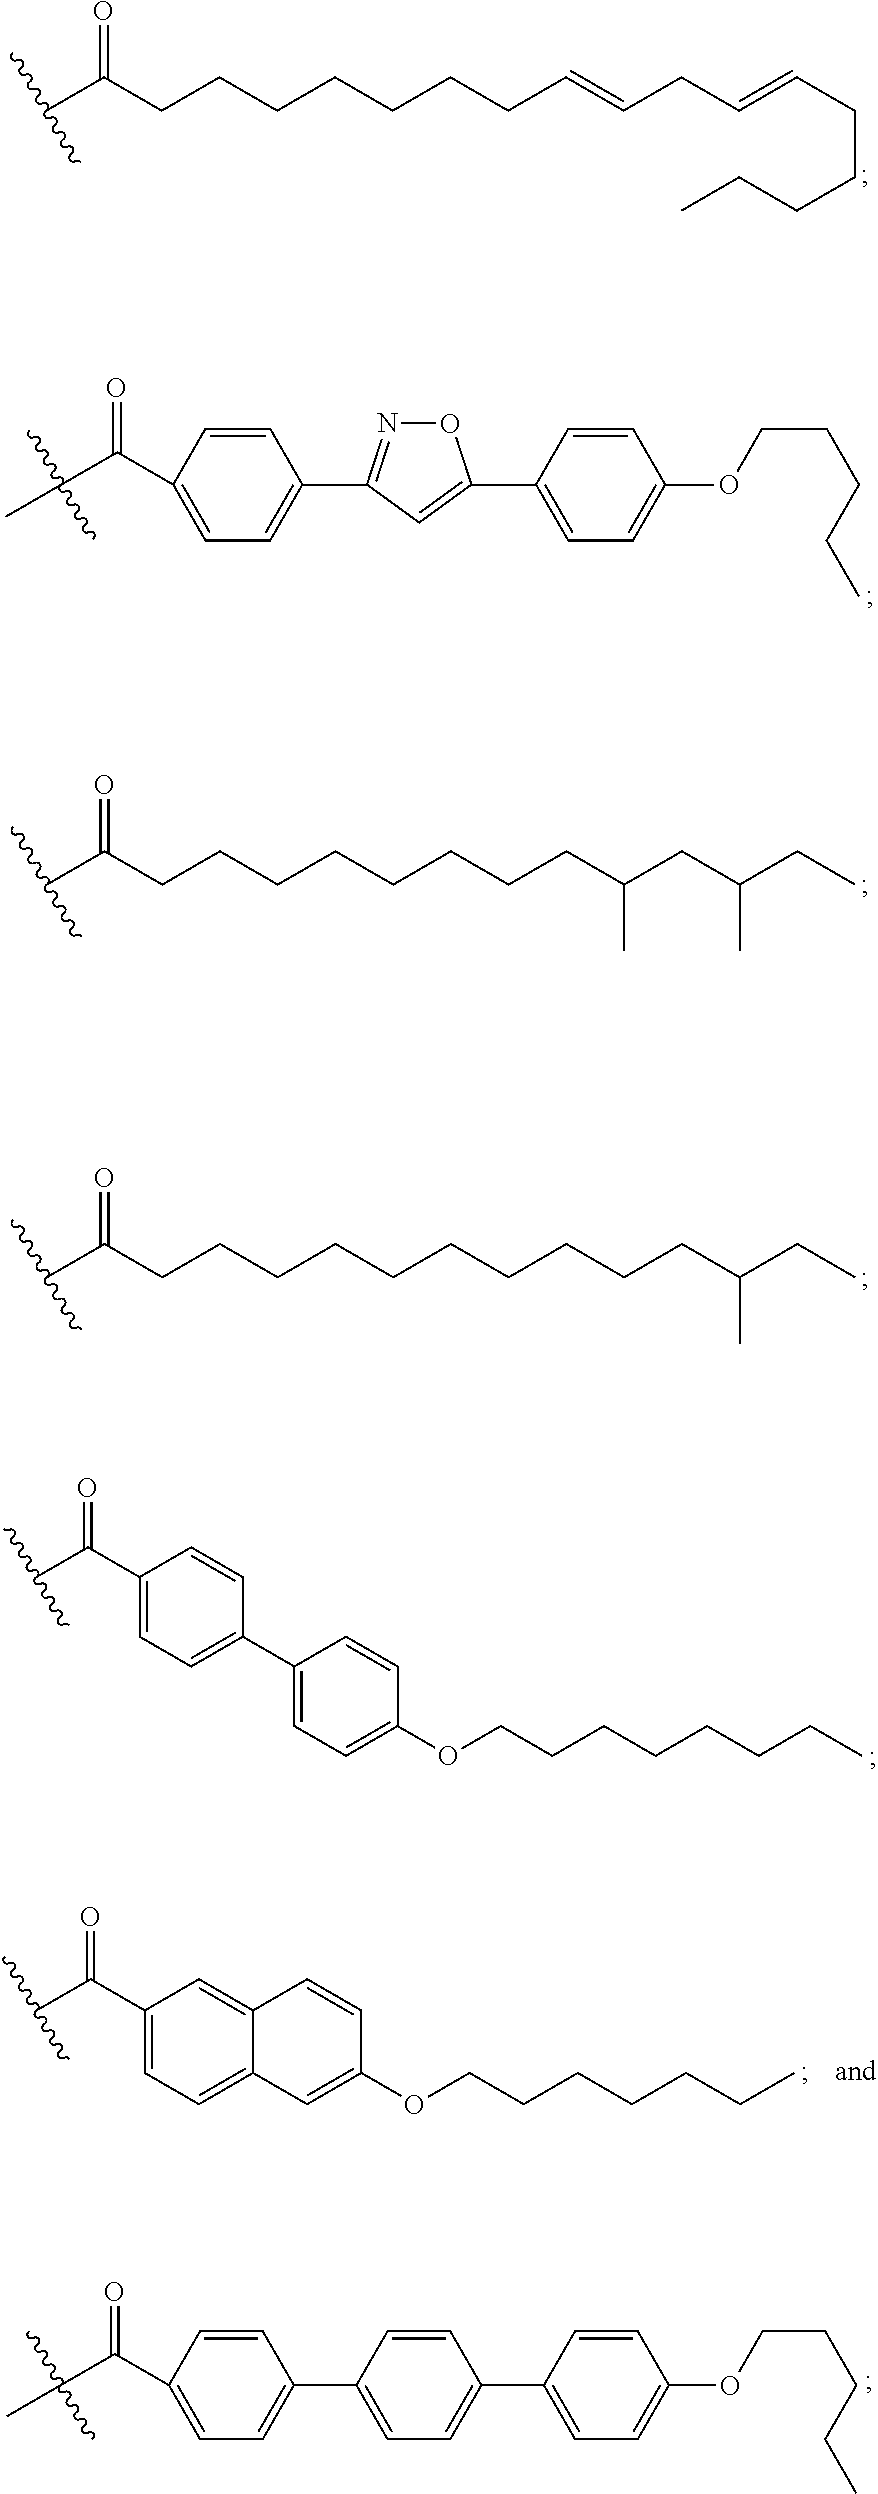 Echinocandin derivatives